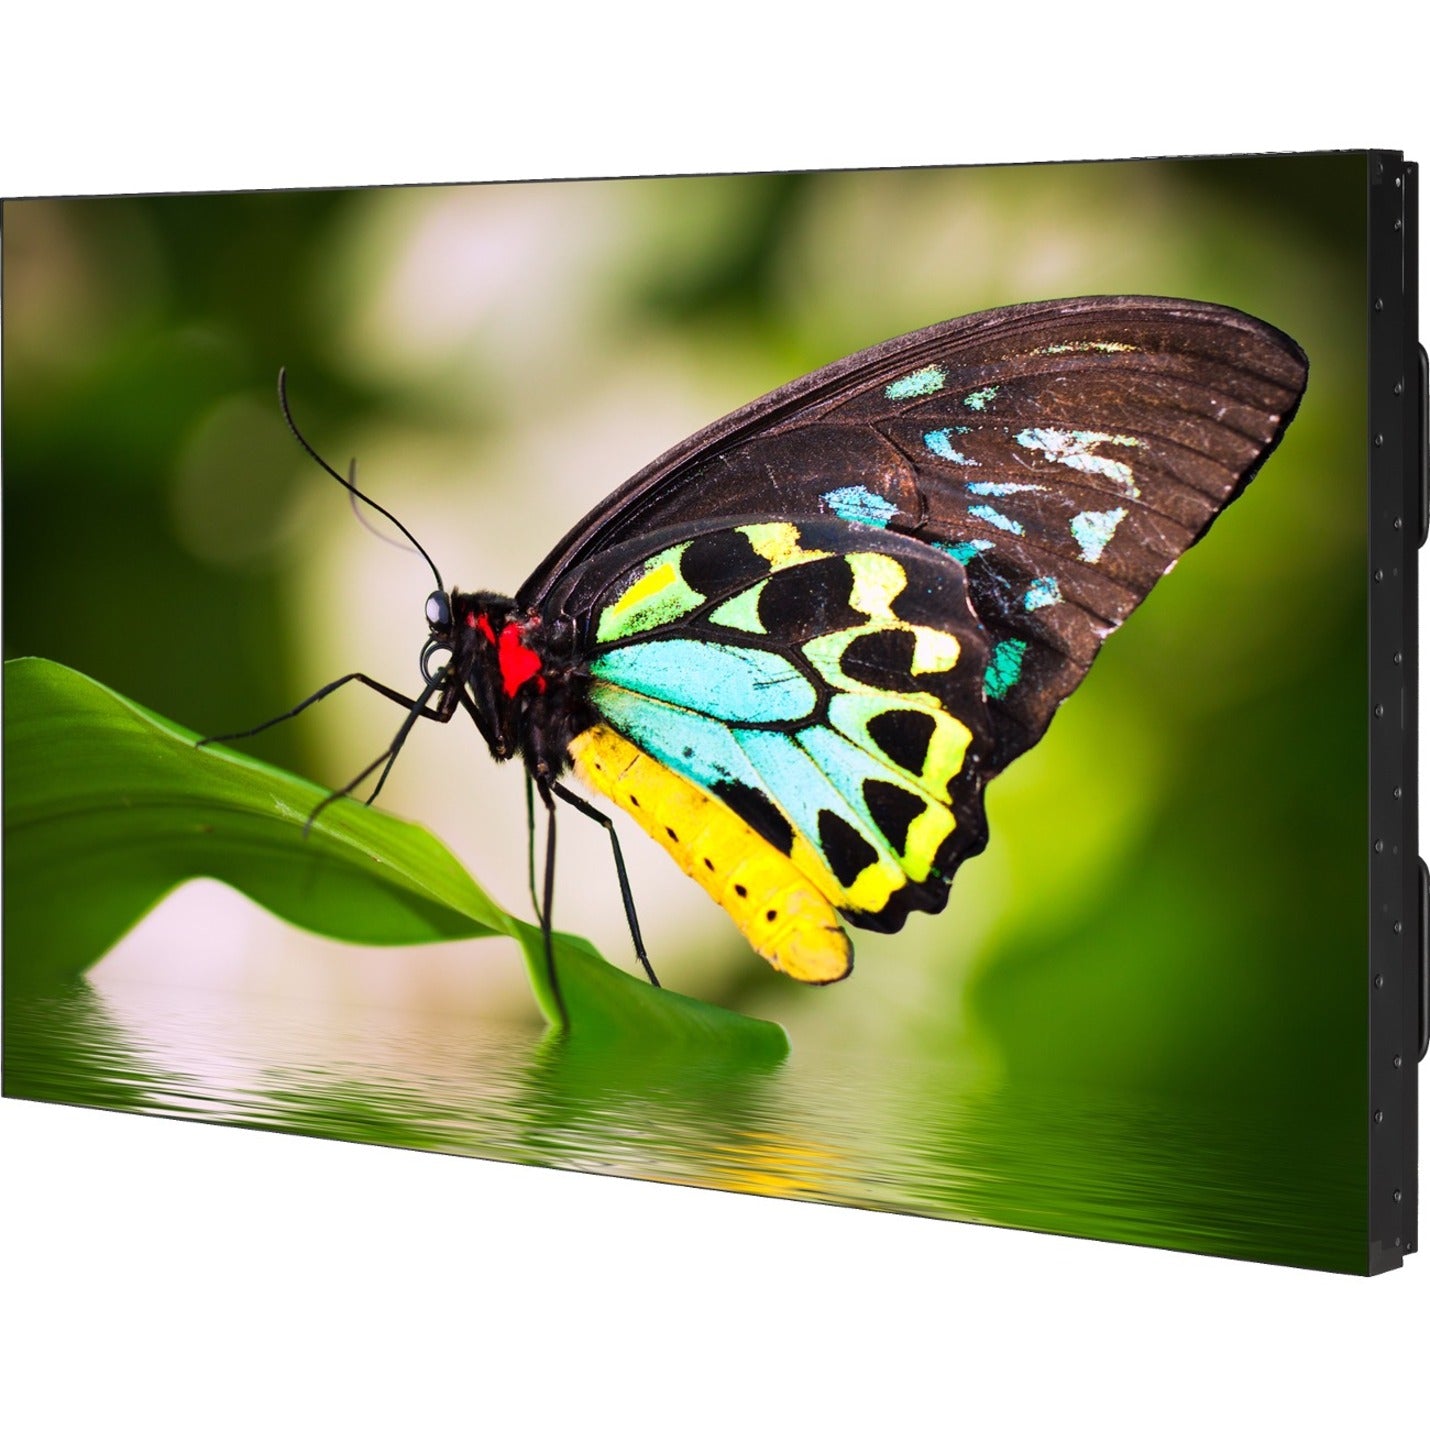 Sharp NEC Display 55" Ultra Narrow Bezel S-IPS 3x3 Video Wall Solution (UN552-TMX9P)